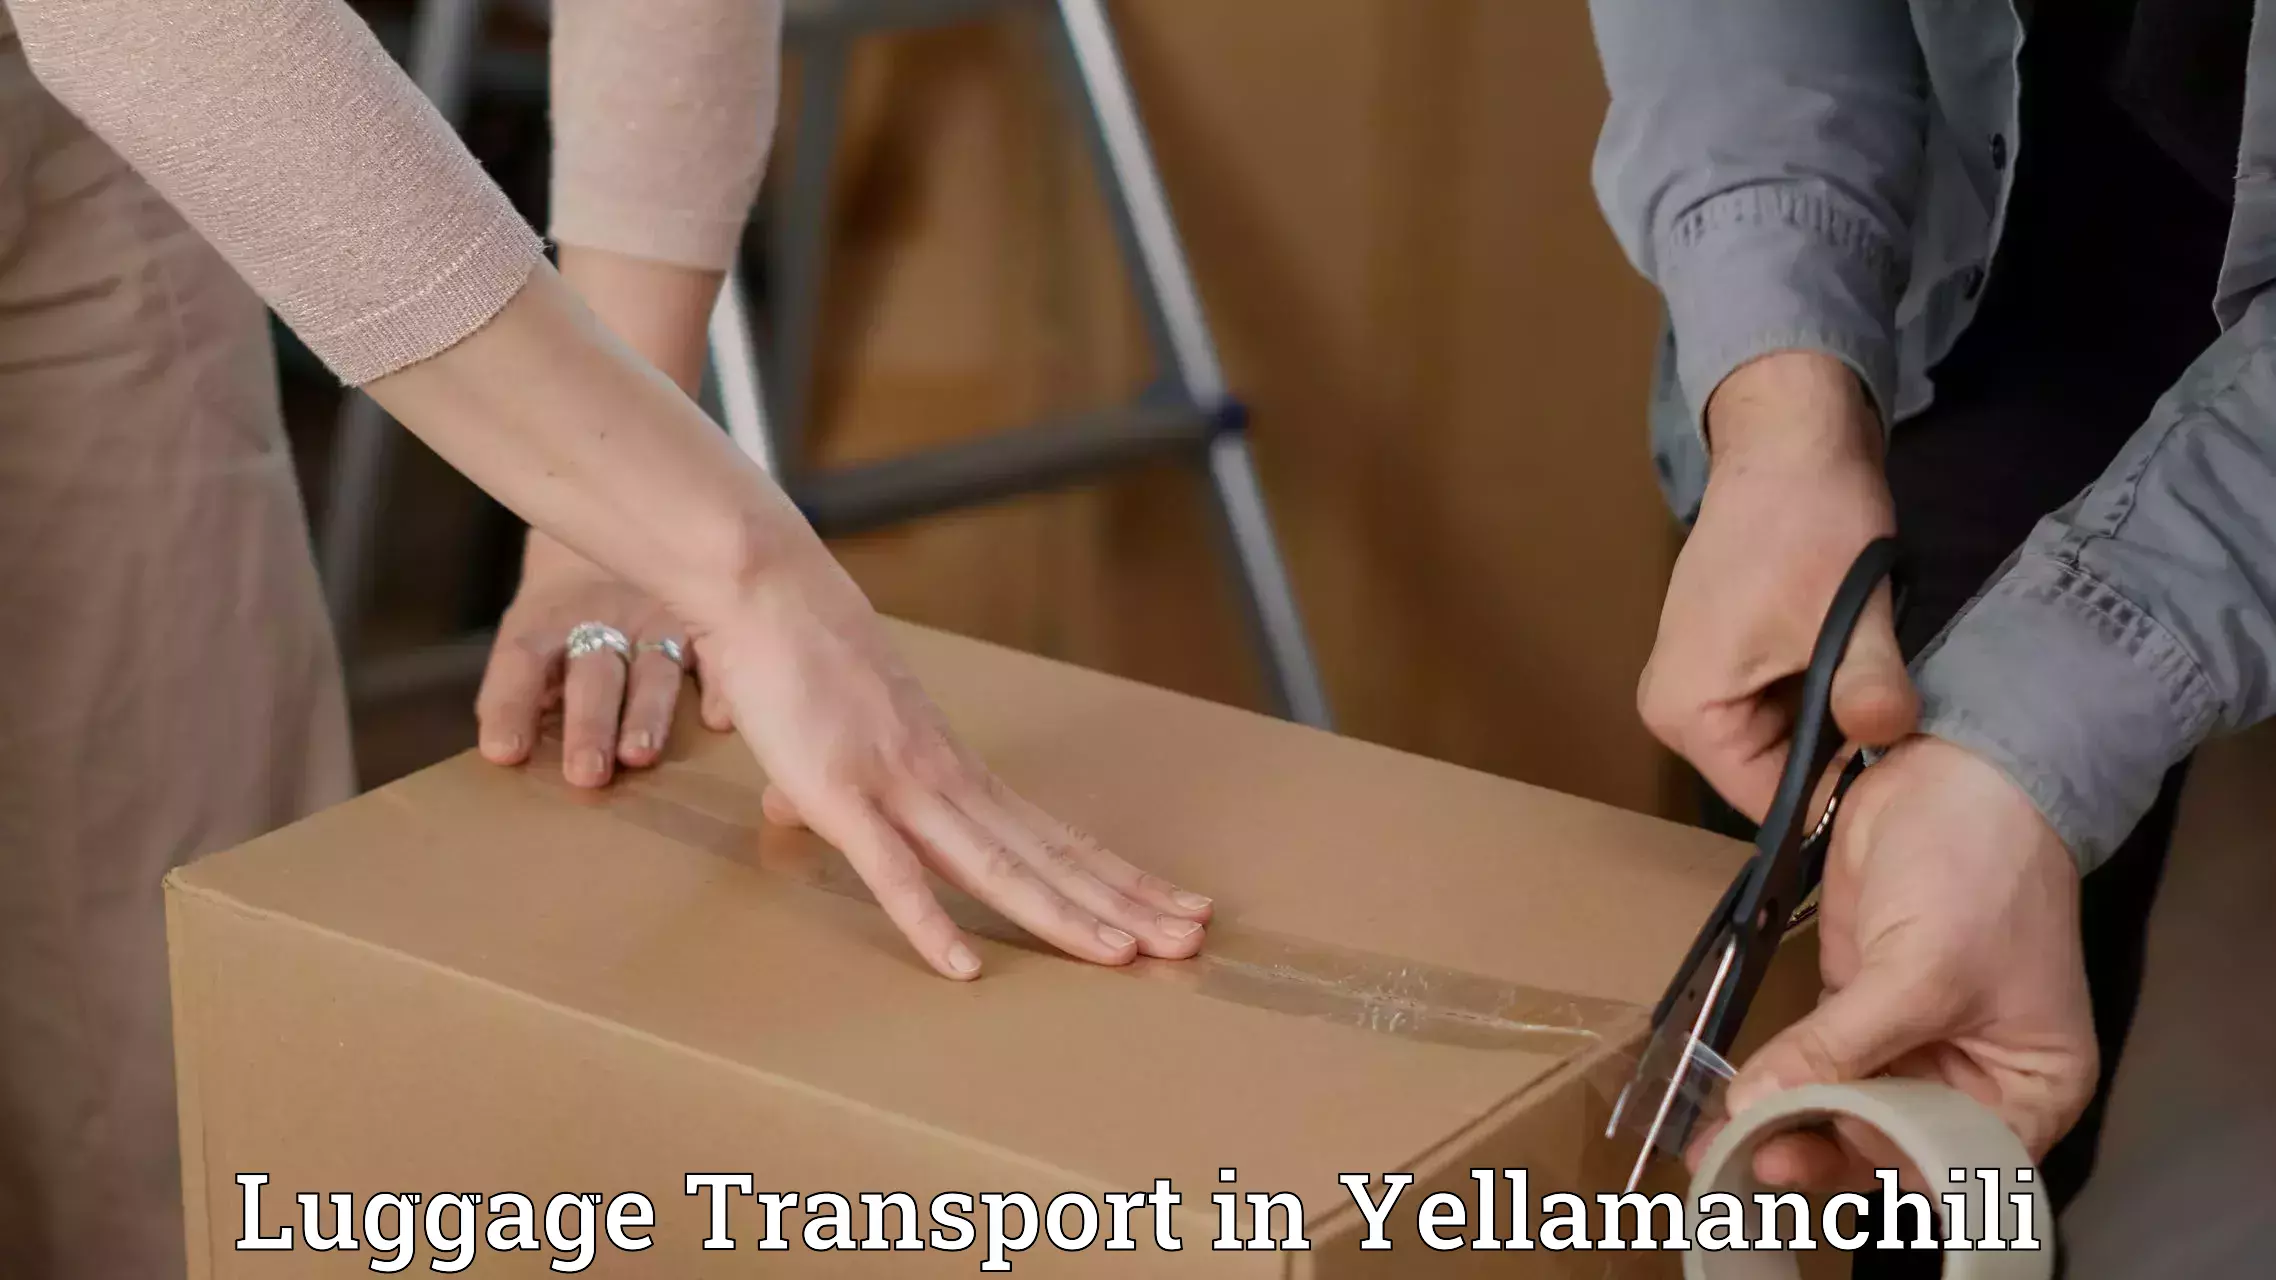 Luggage shipment tracking in Yellamanchili